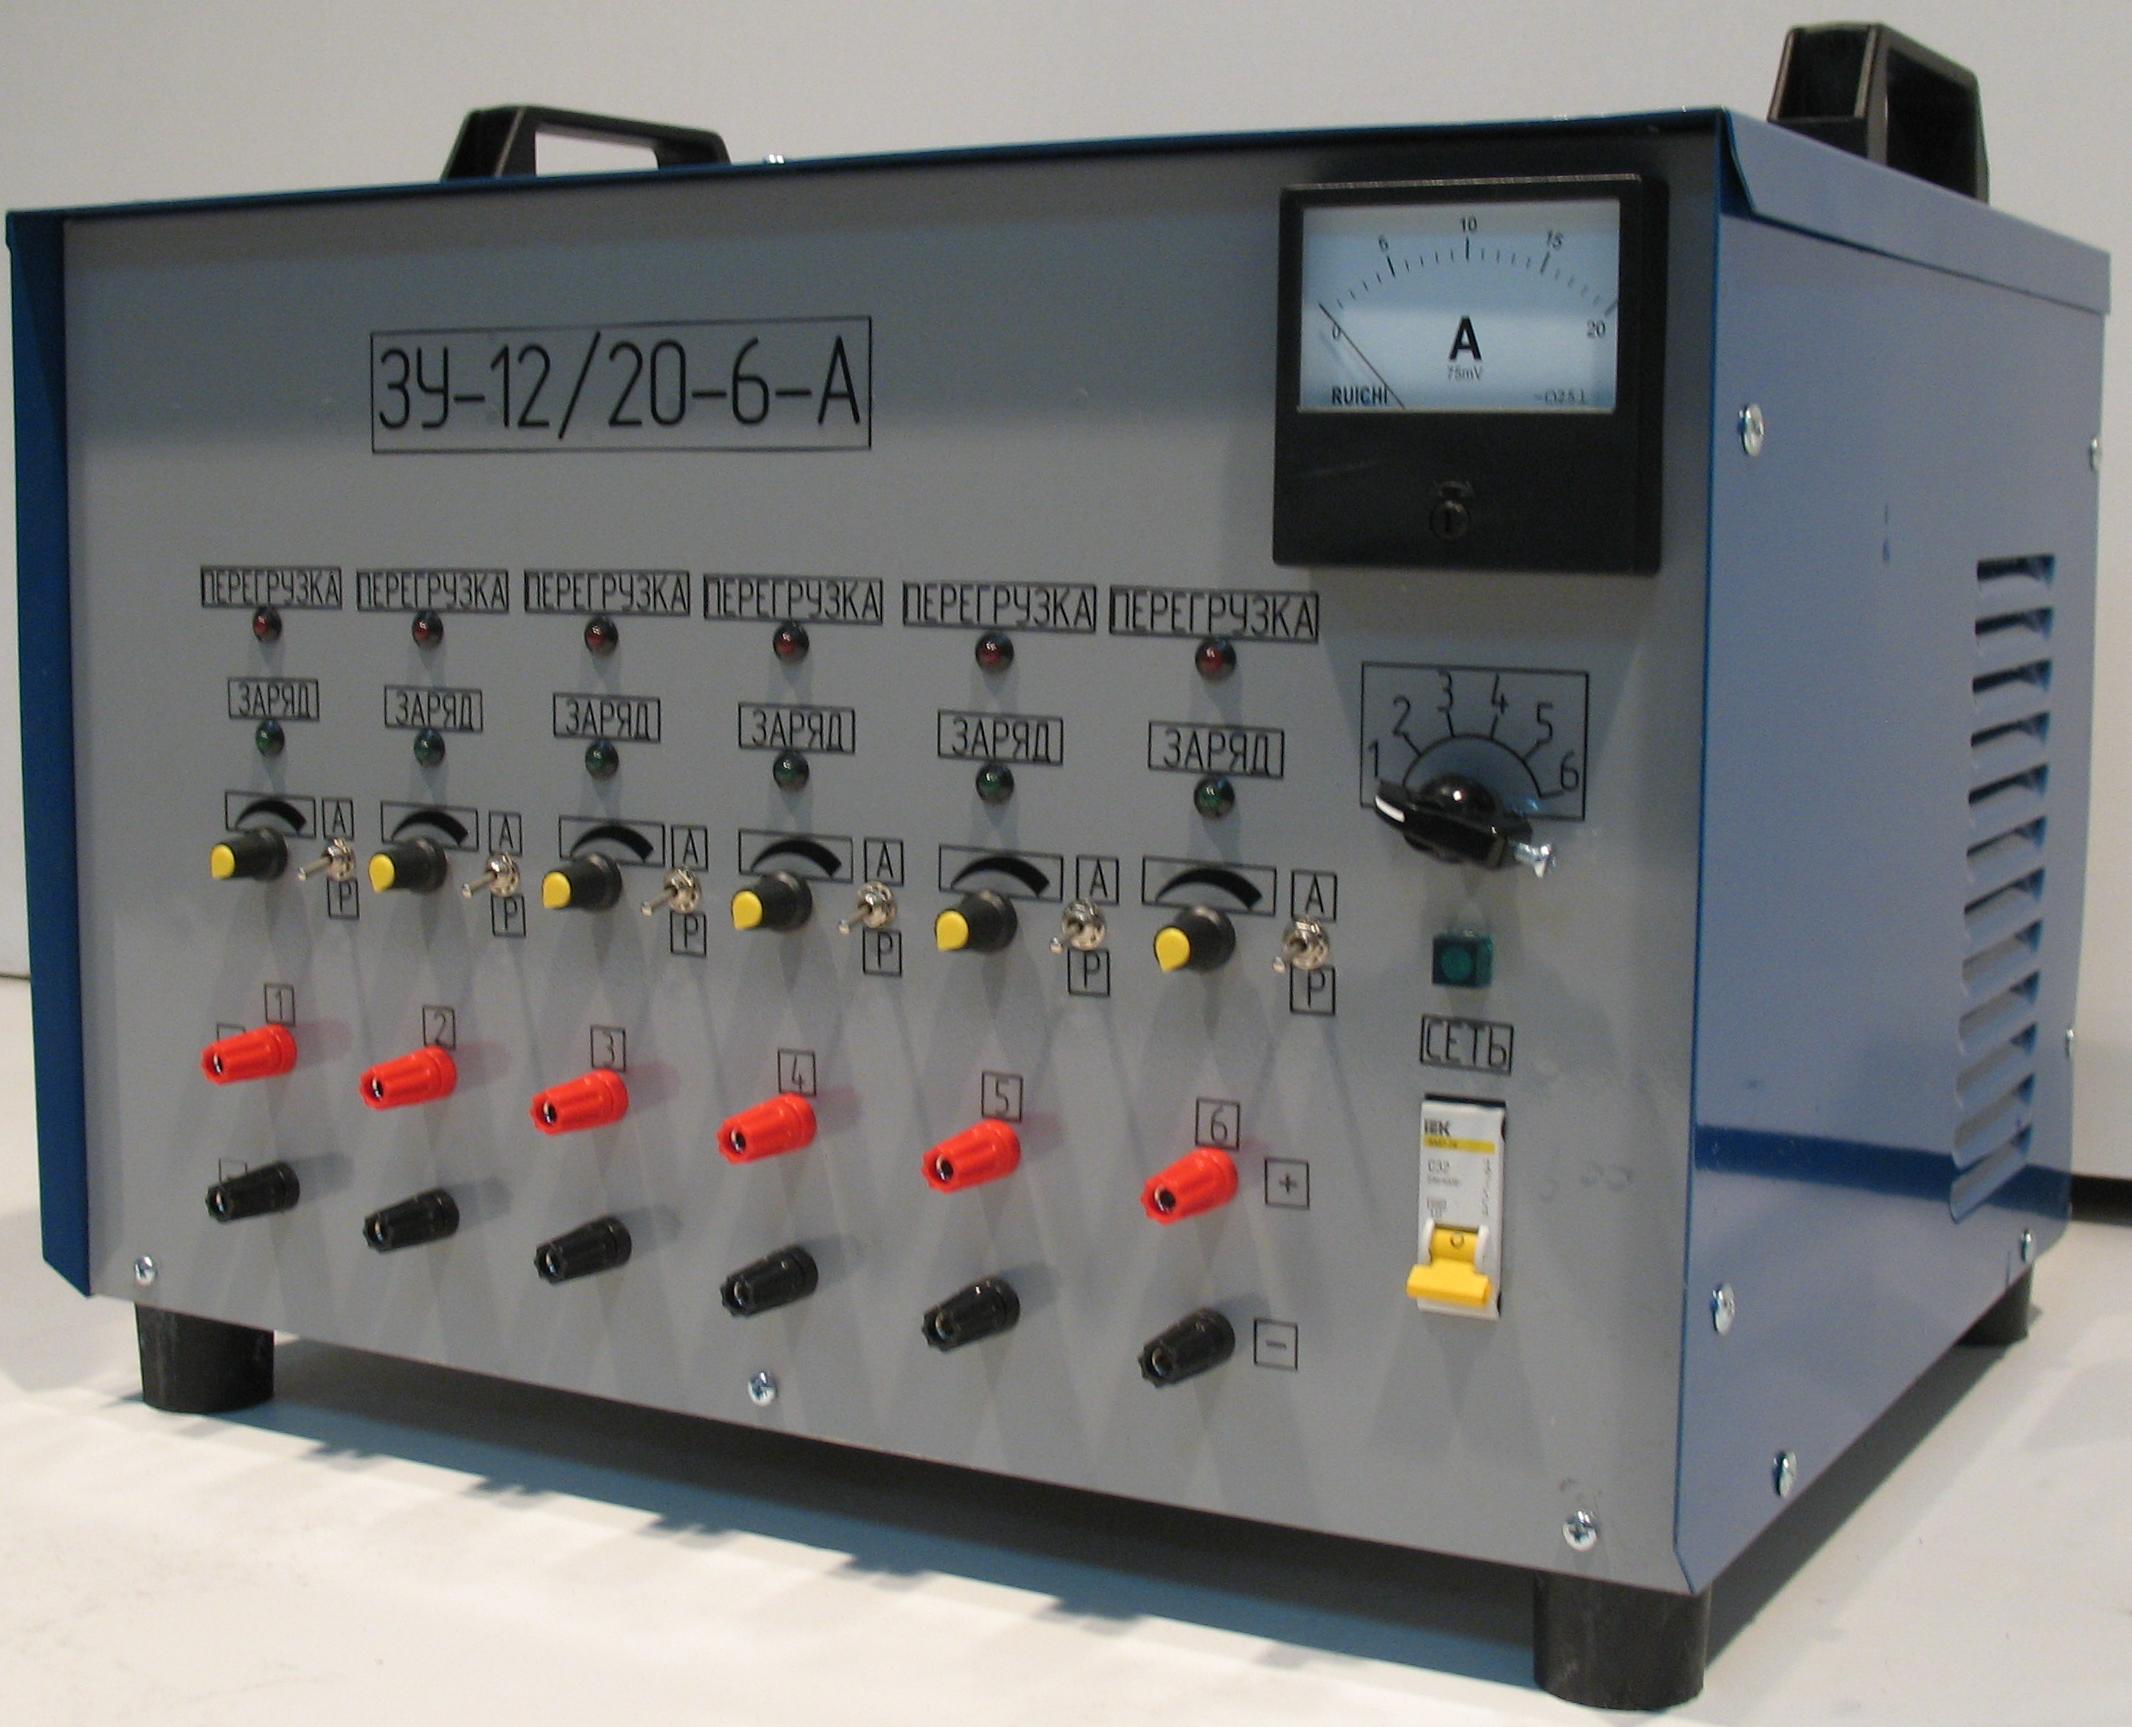 Зарядка стационарная. Шестиканальное зарядное устройство ЗУ-12/20-6а. Зарядное устройство Комета ЗУ-2-6а. Автоматическое зарядное устройство ЗУ 20. Многопостовое зарядное устройство ЗУ-12/20-6-А.